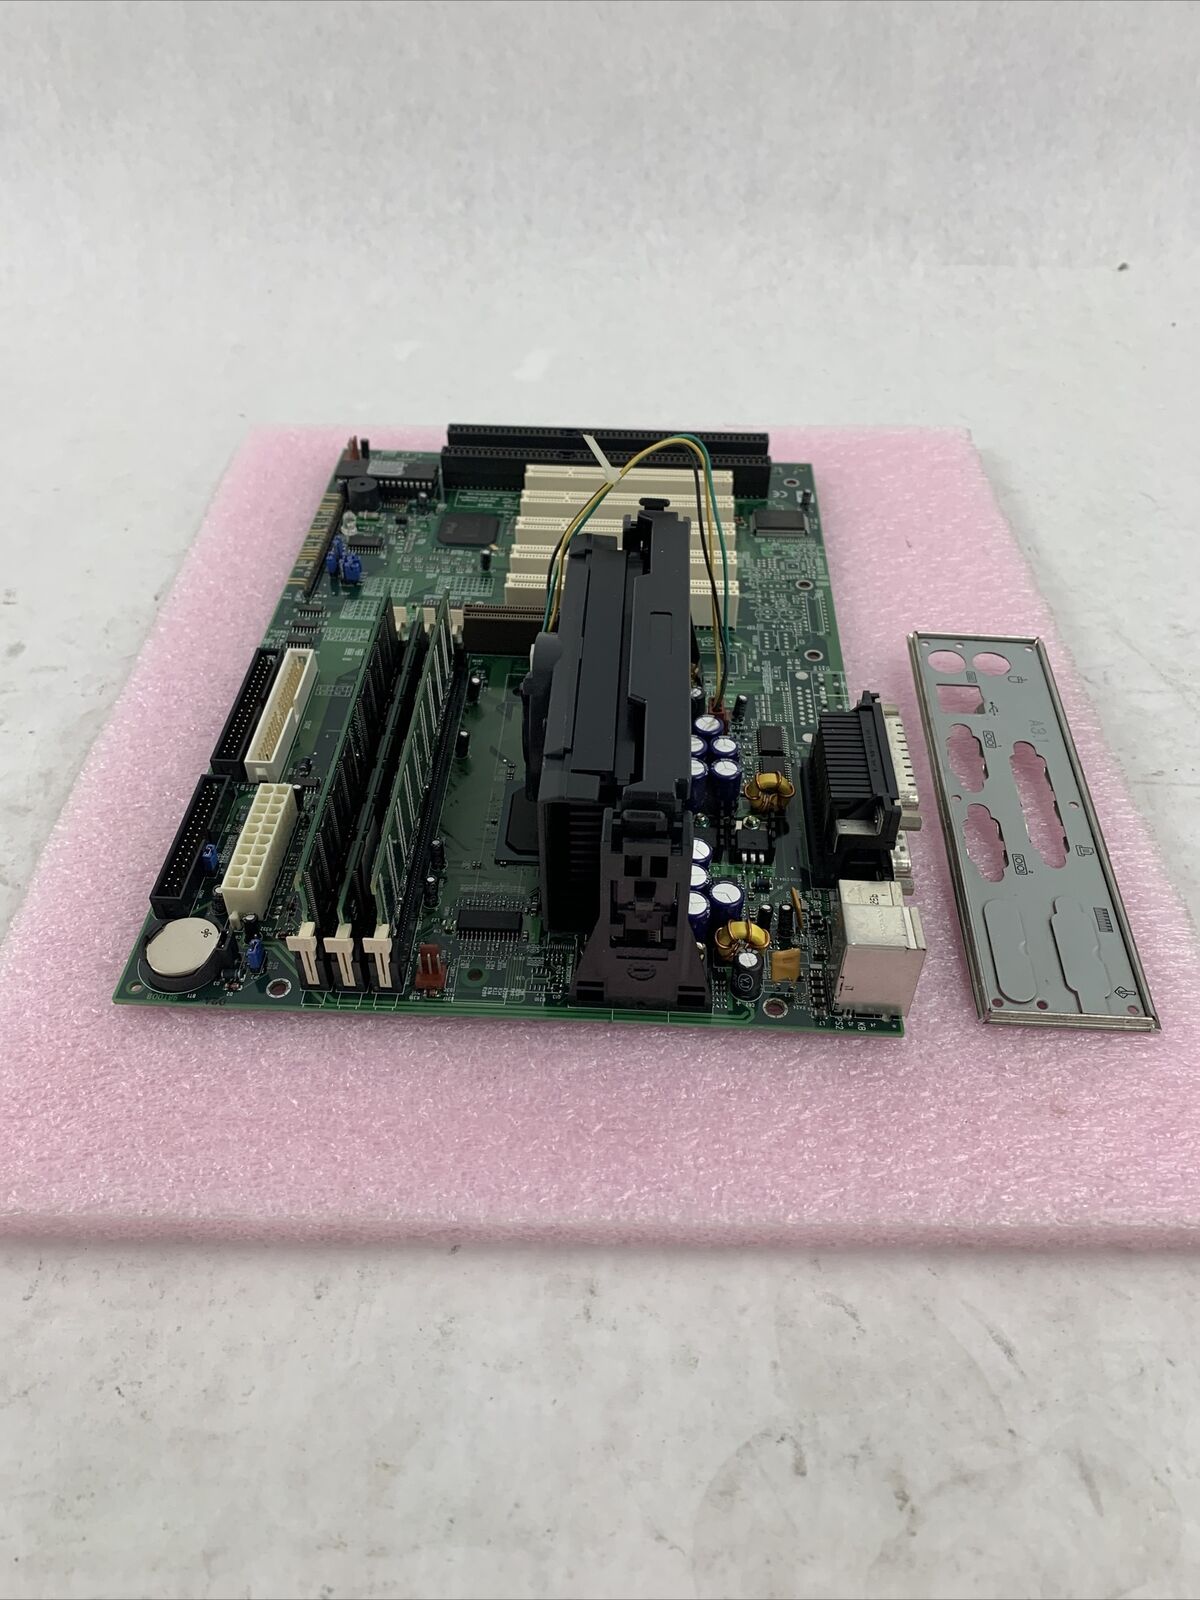 Tyan S1848 Motherboard Intel Pentium III 450MHz 416MB RAM 2x ISA w/ I/O Shield